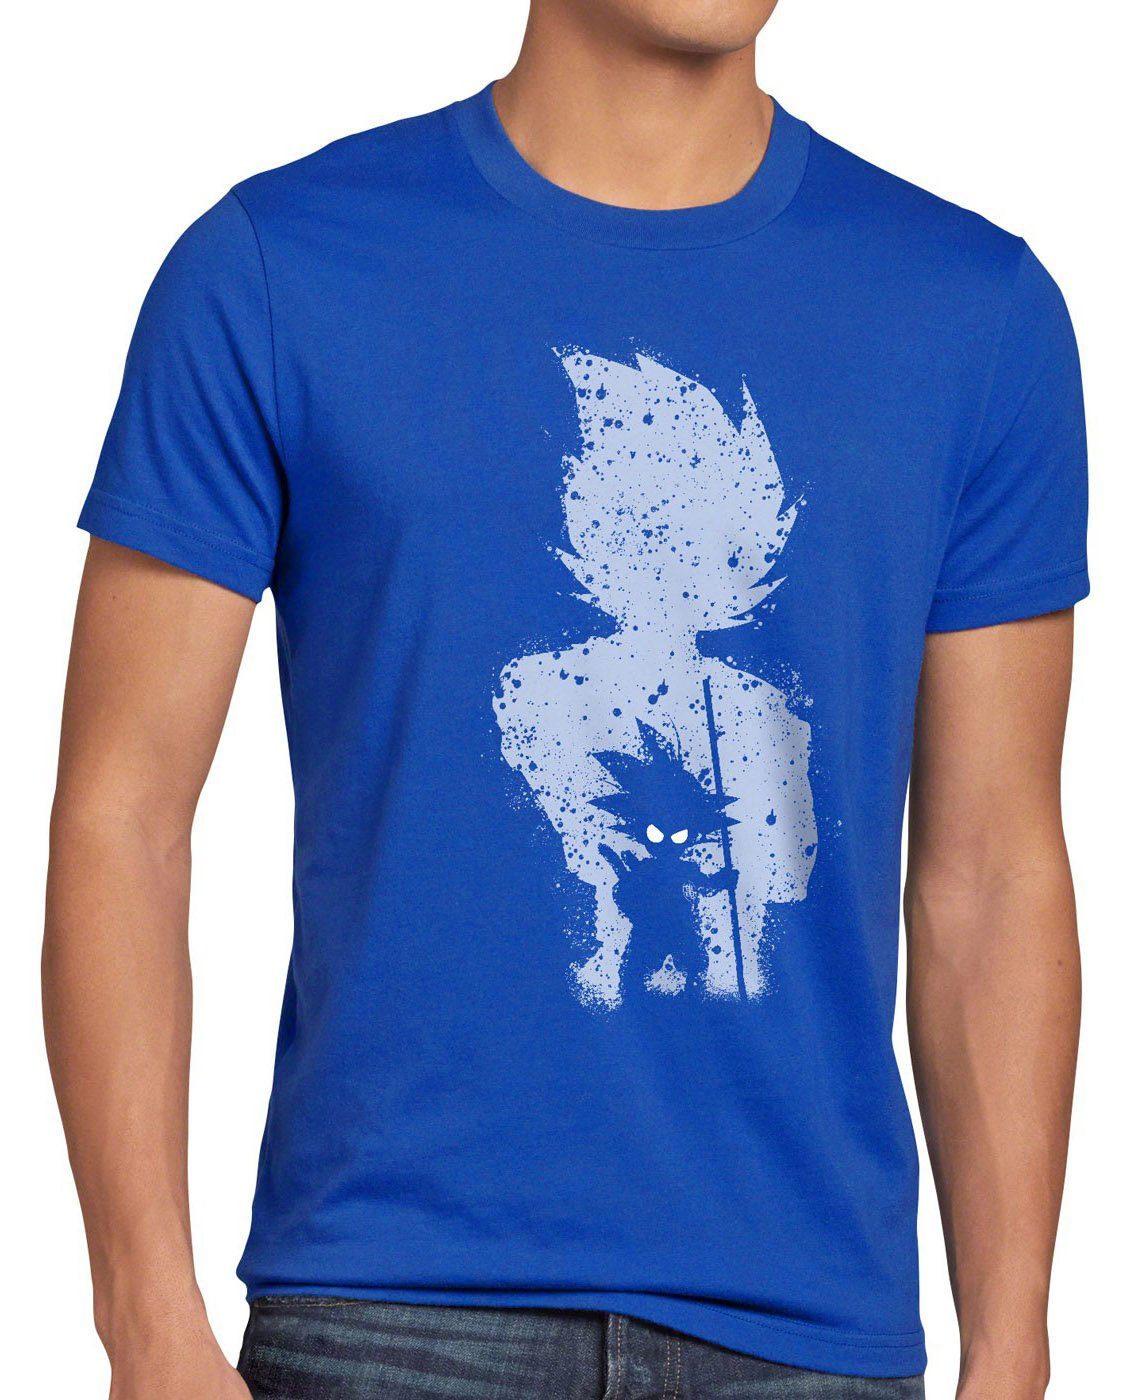 Print-Shirt roshi son Evolution blau style3 saiyajin balls dragon T-Shirt Herren anime Goku vegeta ball